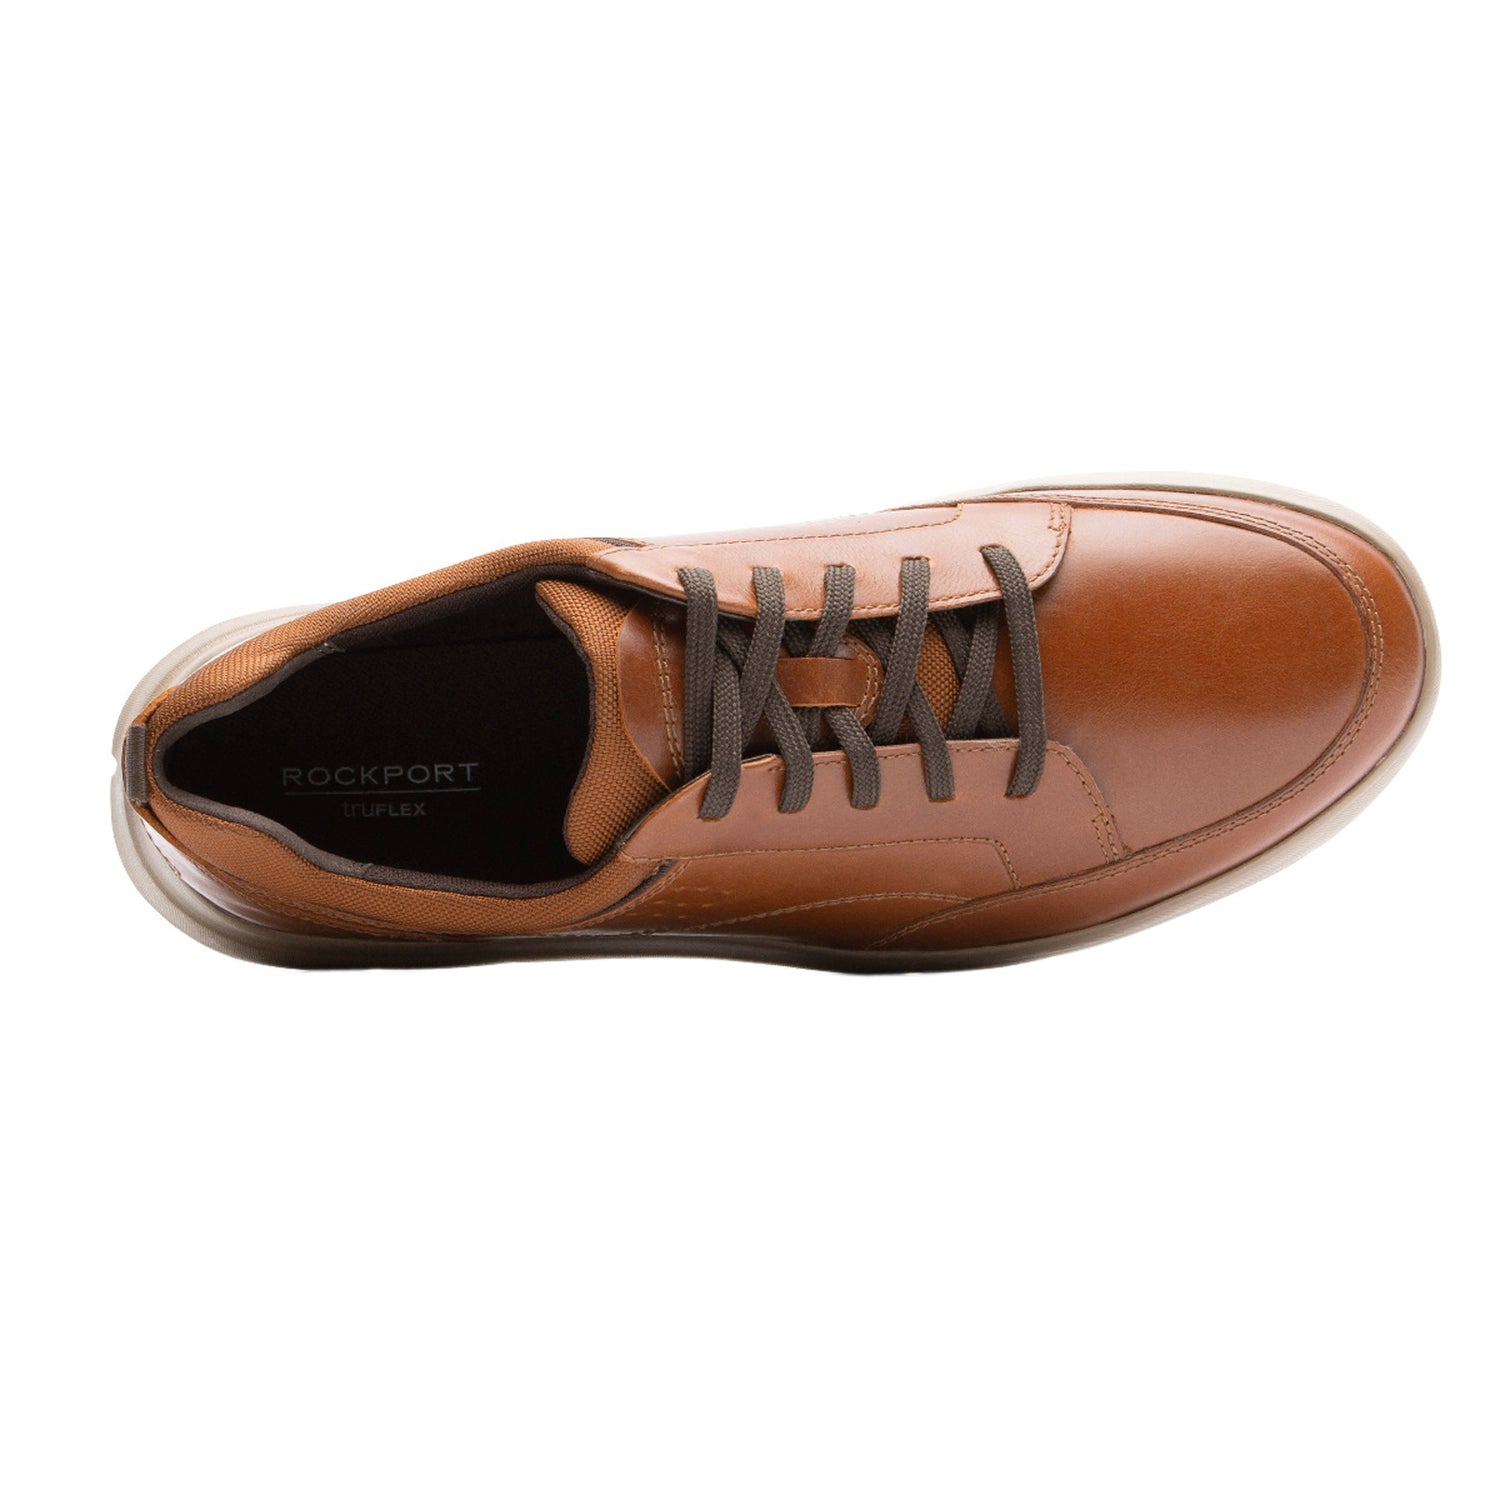 Peltz Shoes  Men's Rockport Truflex Cayden LTT Shoe TAN CI9634